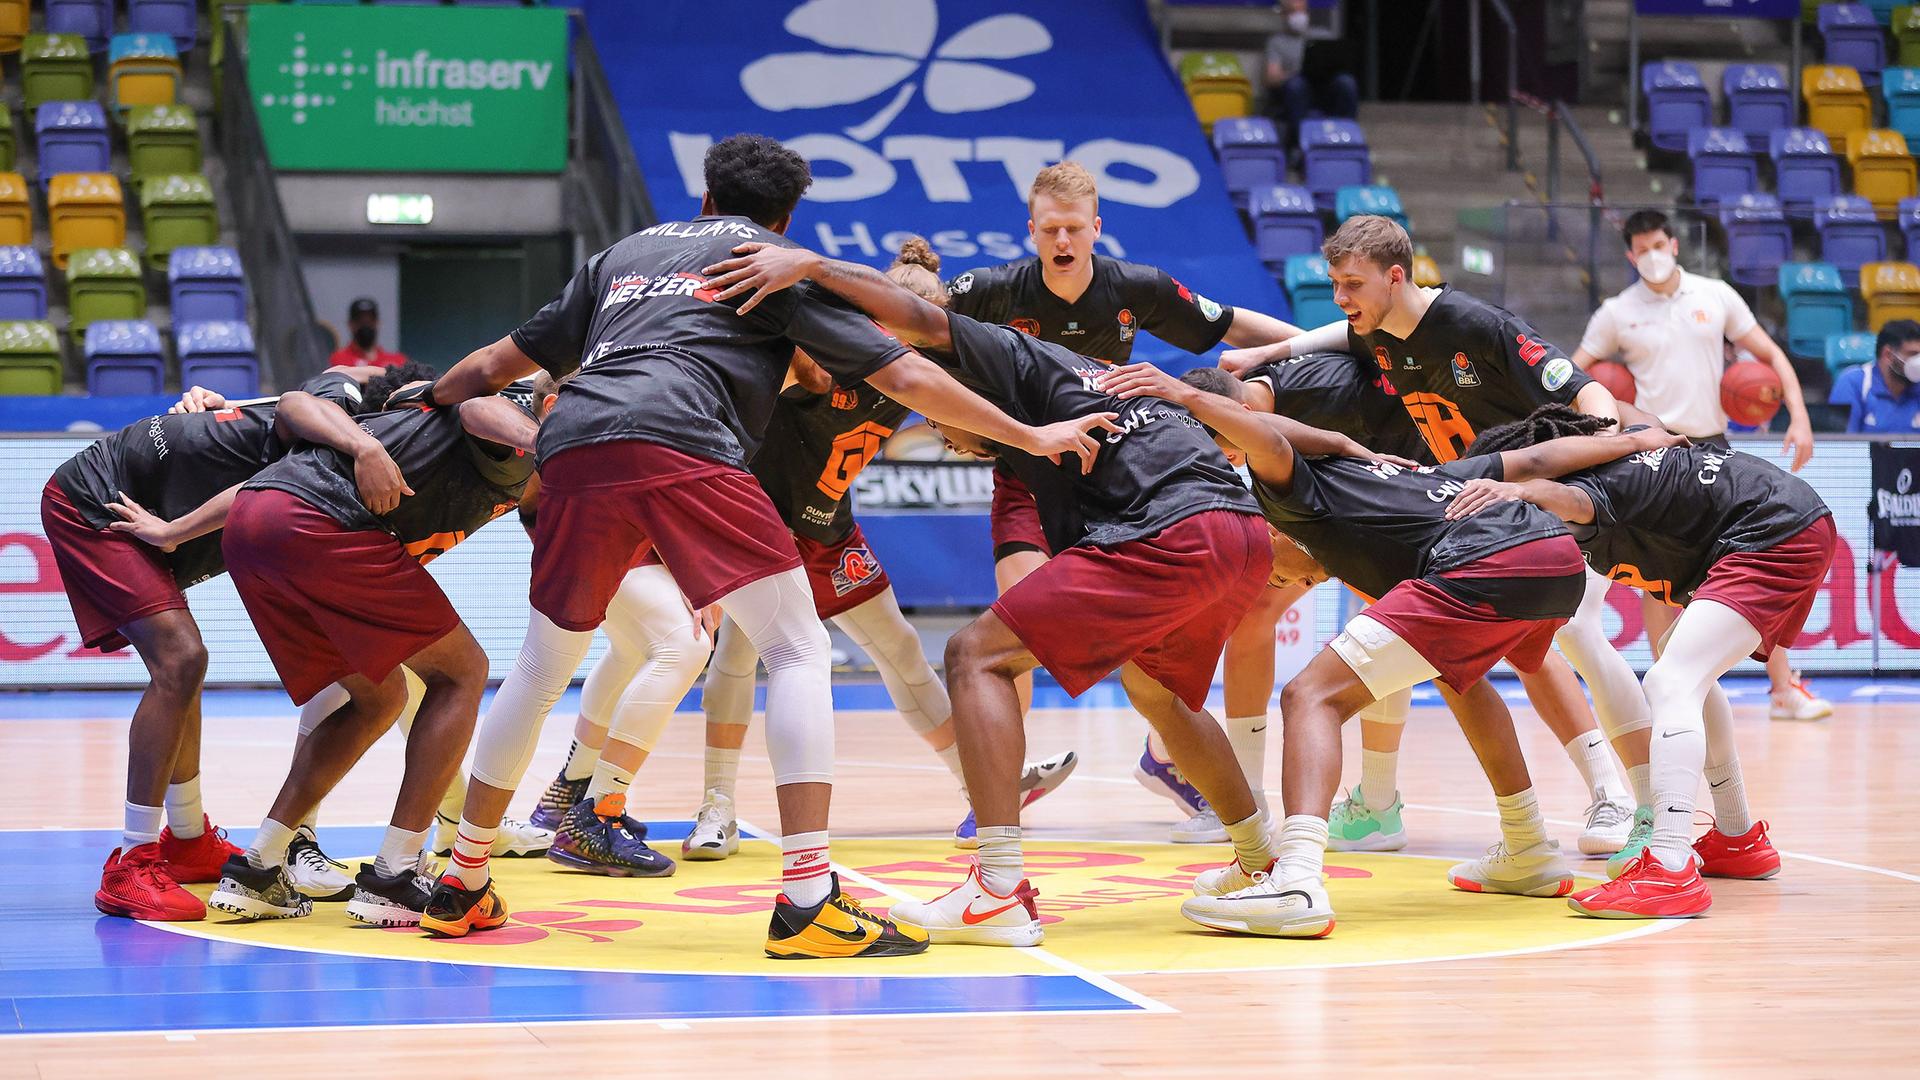 Basketball - Komplettes Team Corona-positiv - Absage gleich am 1. Spieltag